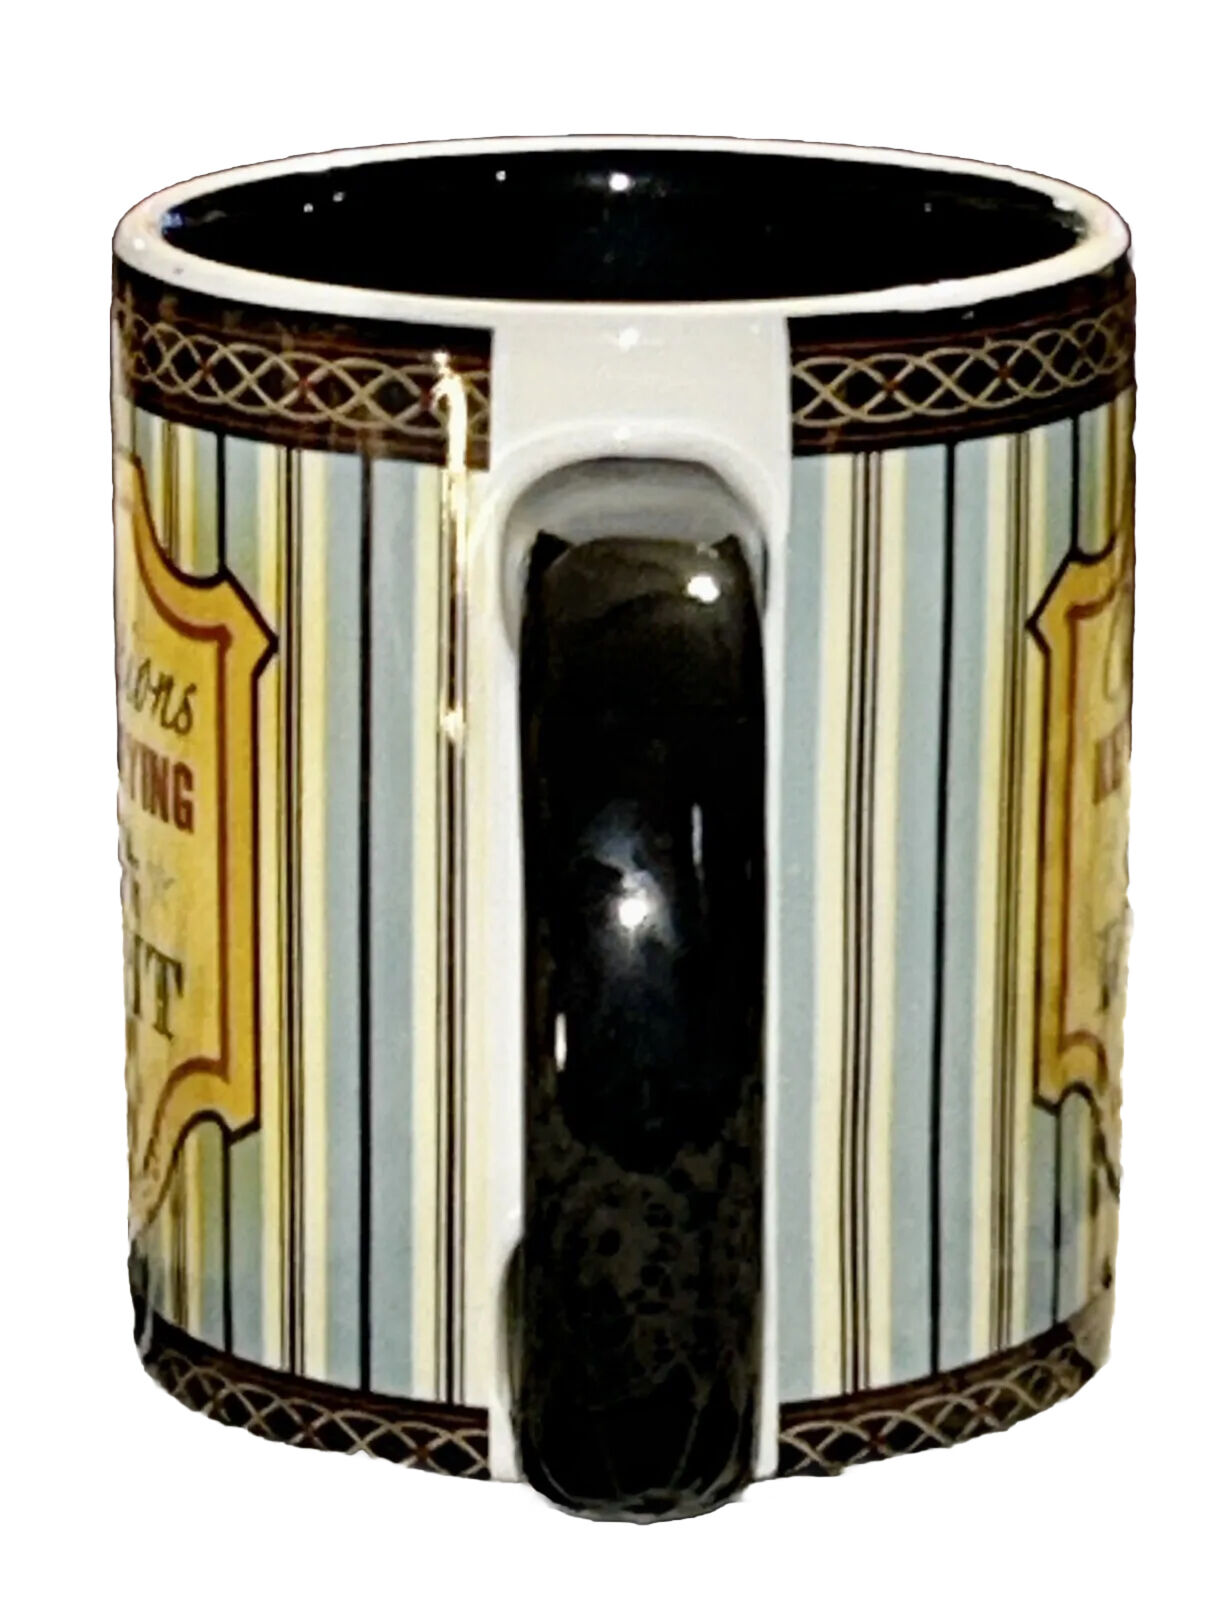 GENTLEMEN’S QUARTERS Giftcraft 2013-14072 “Champions” Ceramic Coffee Mug